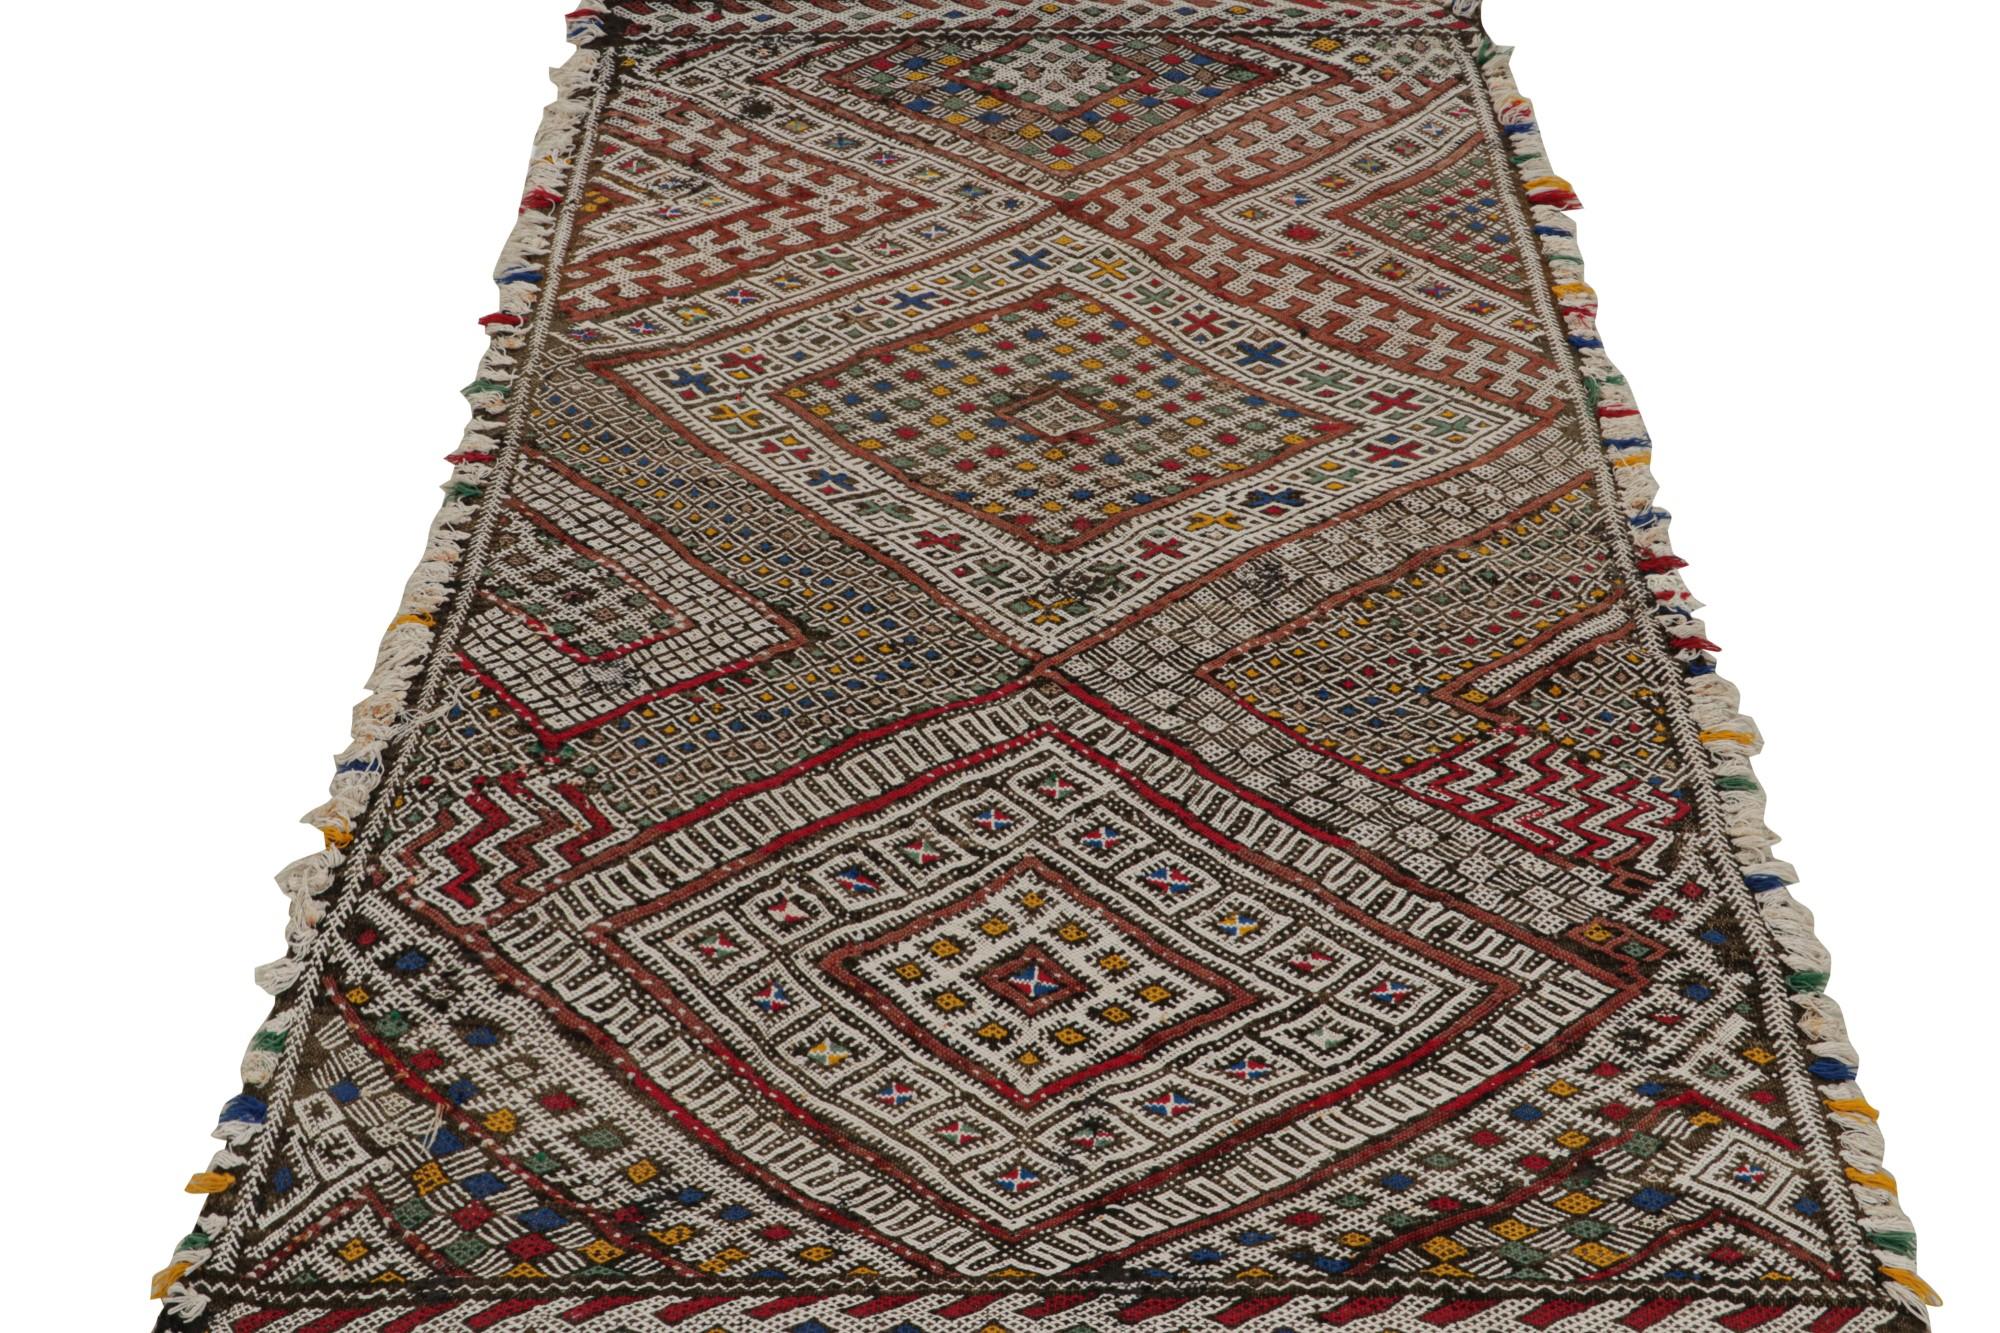 Tribal Vintage Zayane Moroccan Kilim Rug, with Geometric Patterns, from Rug & Kilim  For Sale